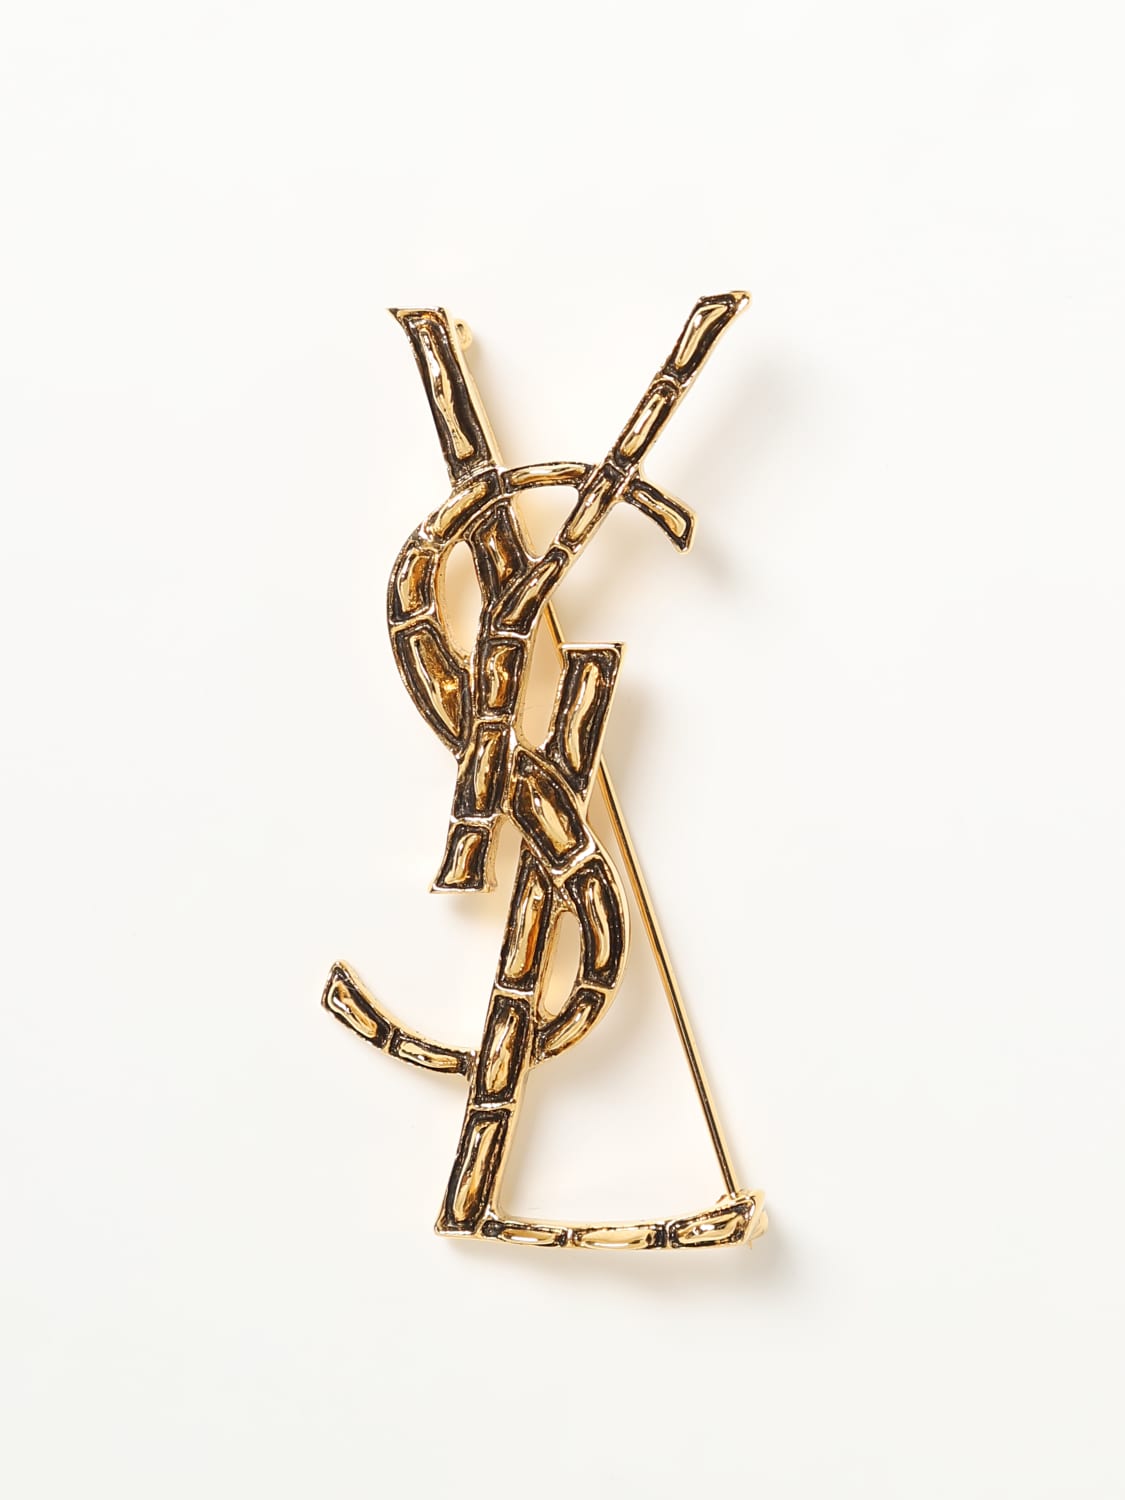 Gold YSL monogrammed brooch, Saint Laurent